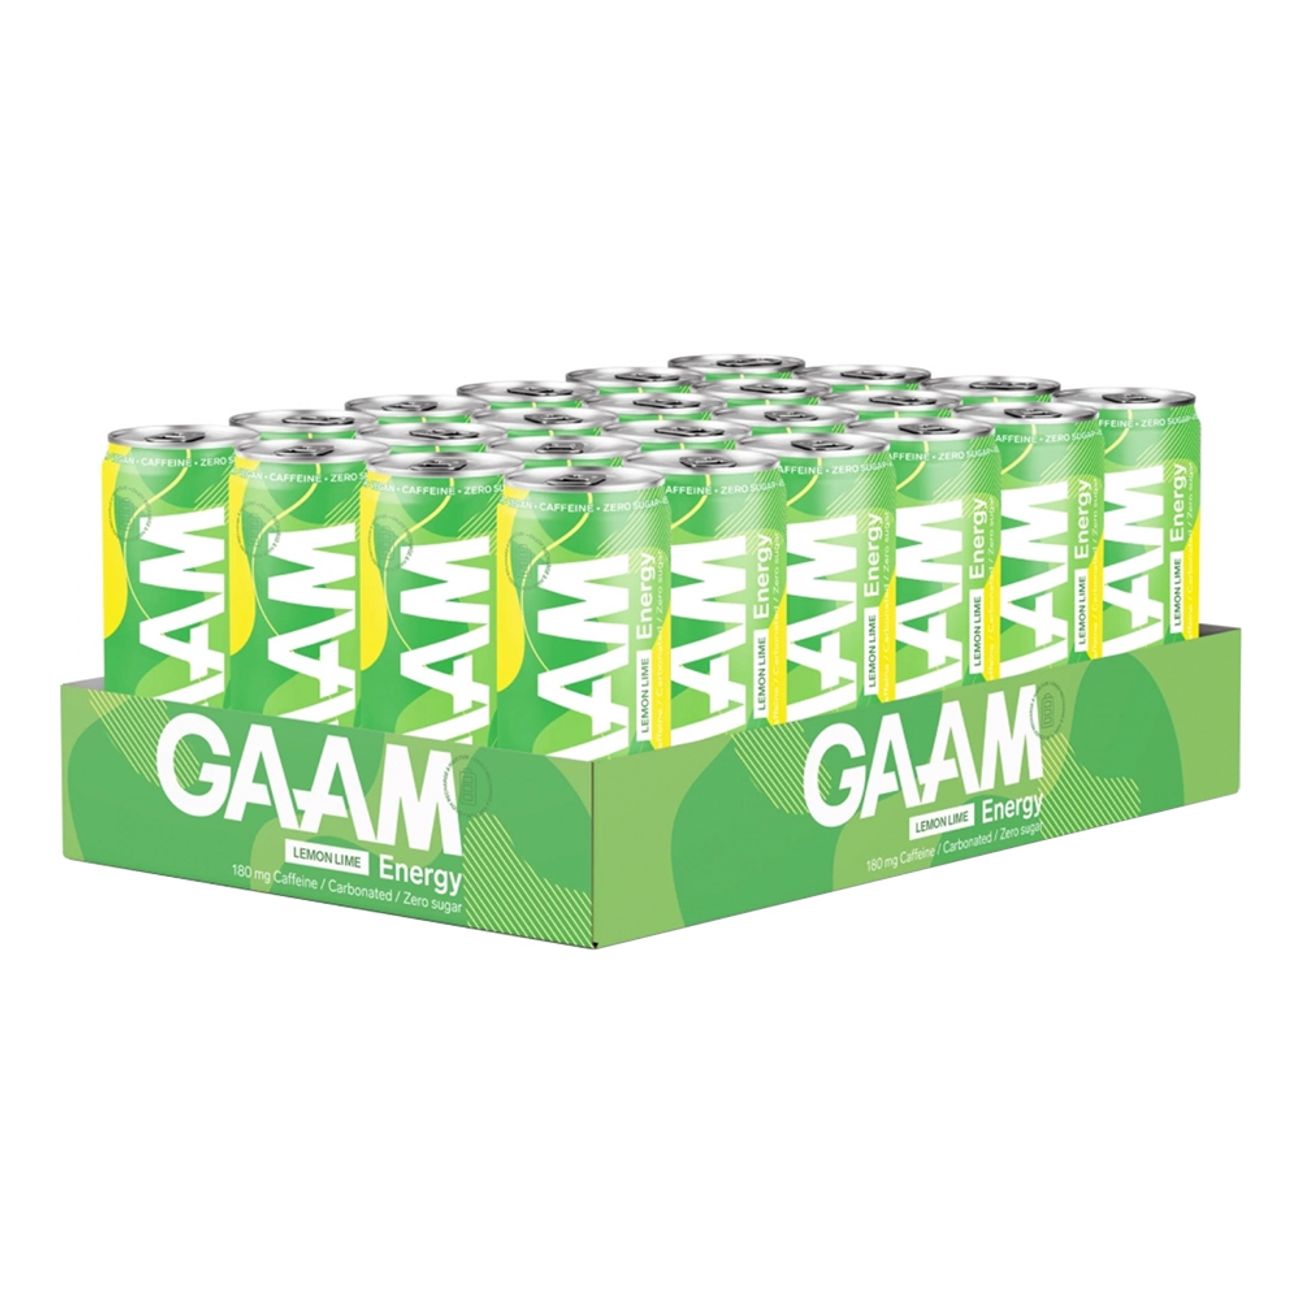 gaam-energy-lemon-lime-79894-2